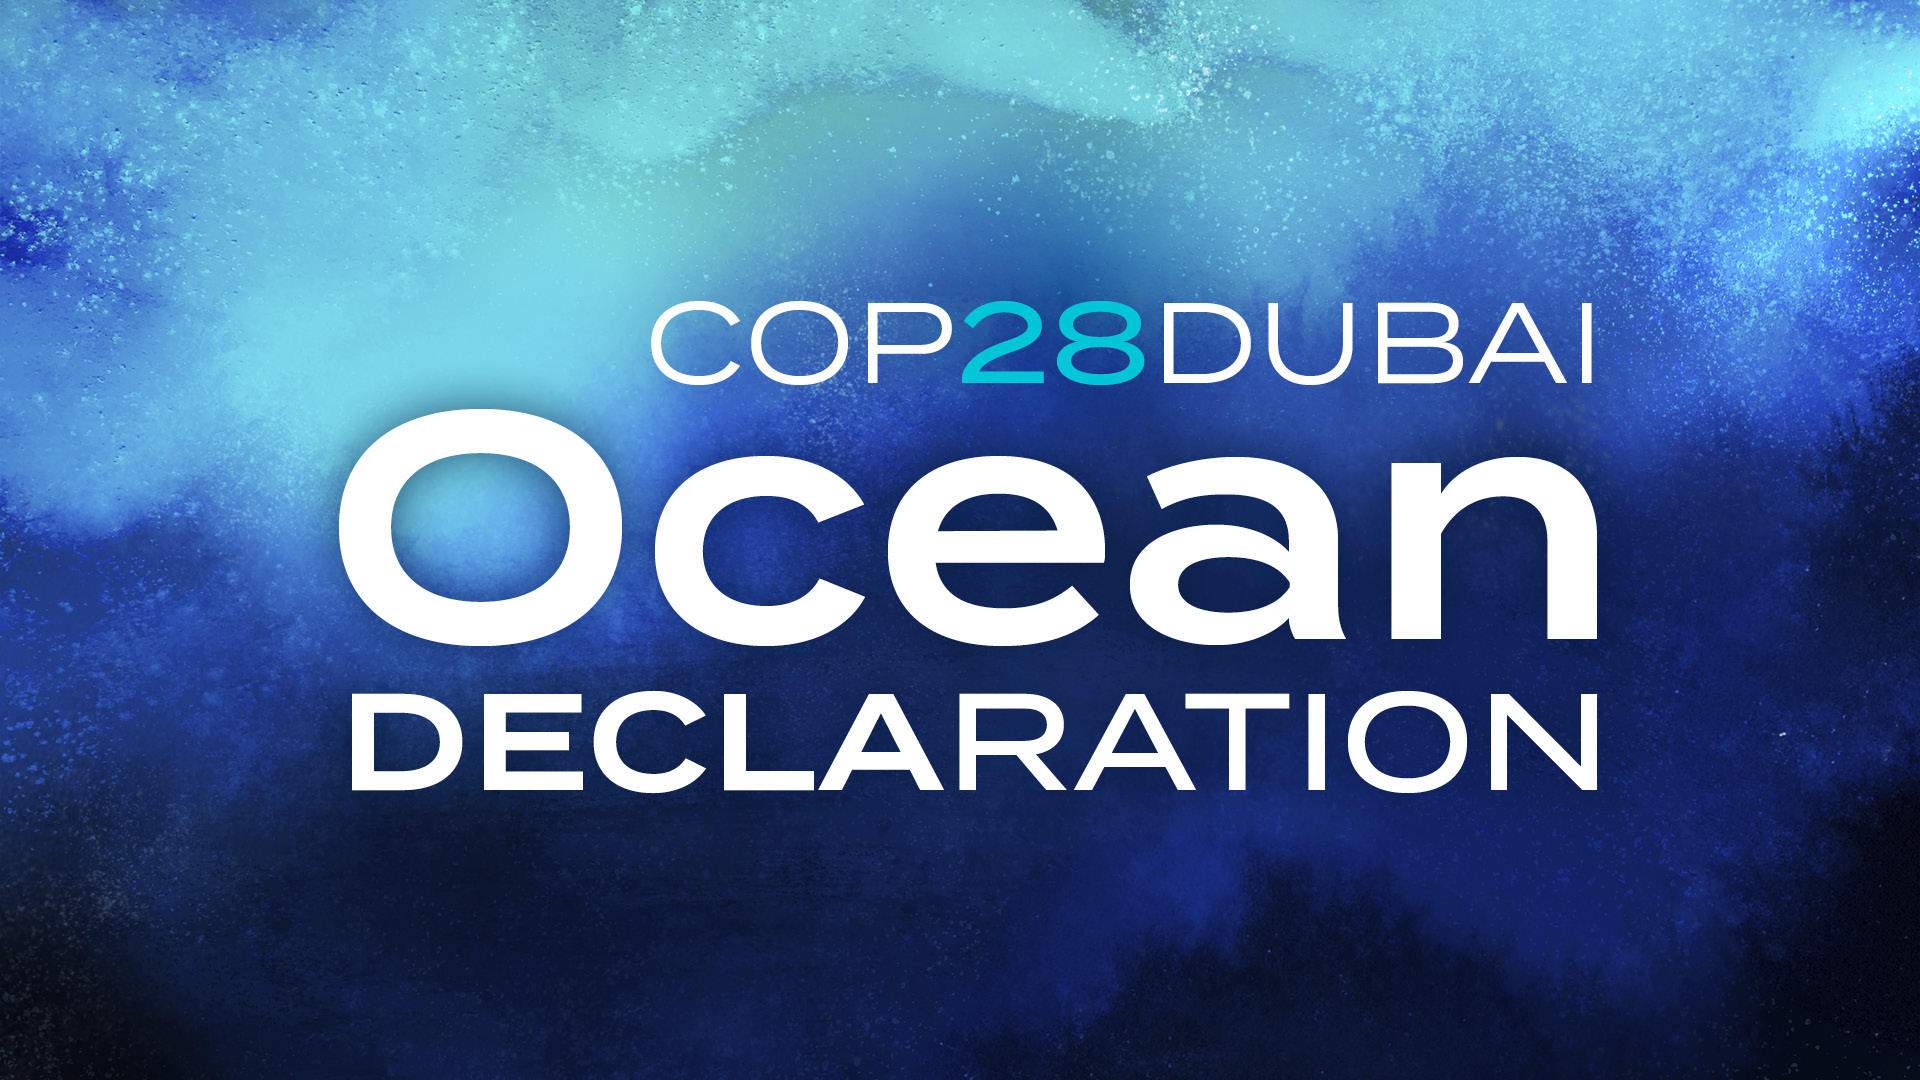 Propeller signs onto COP28 Dubai Ocean Declaration